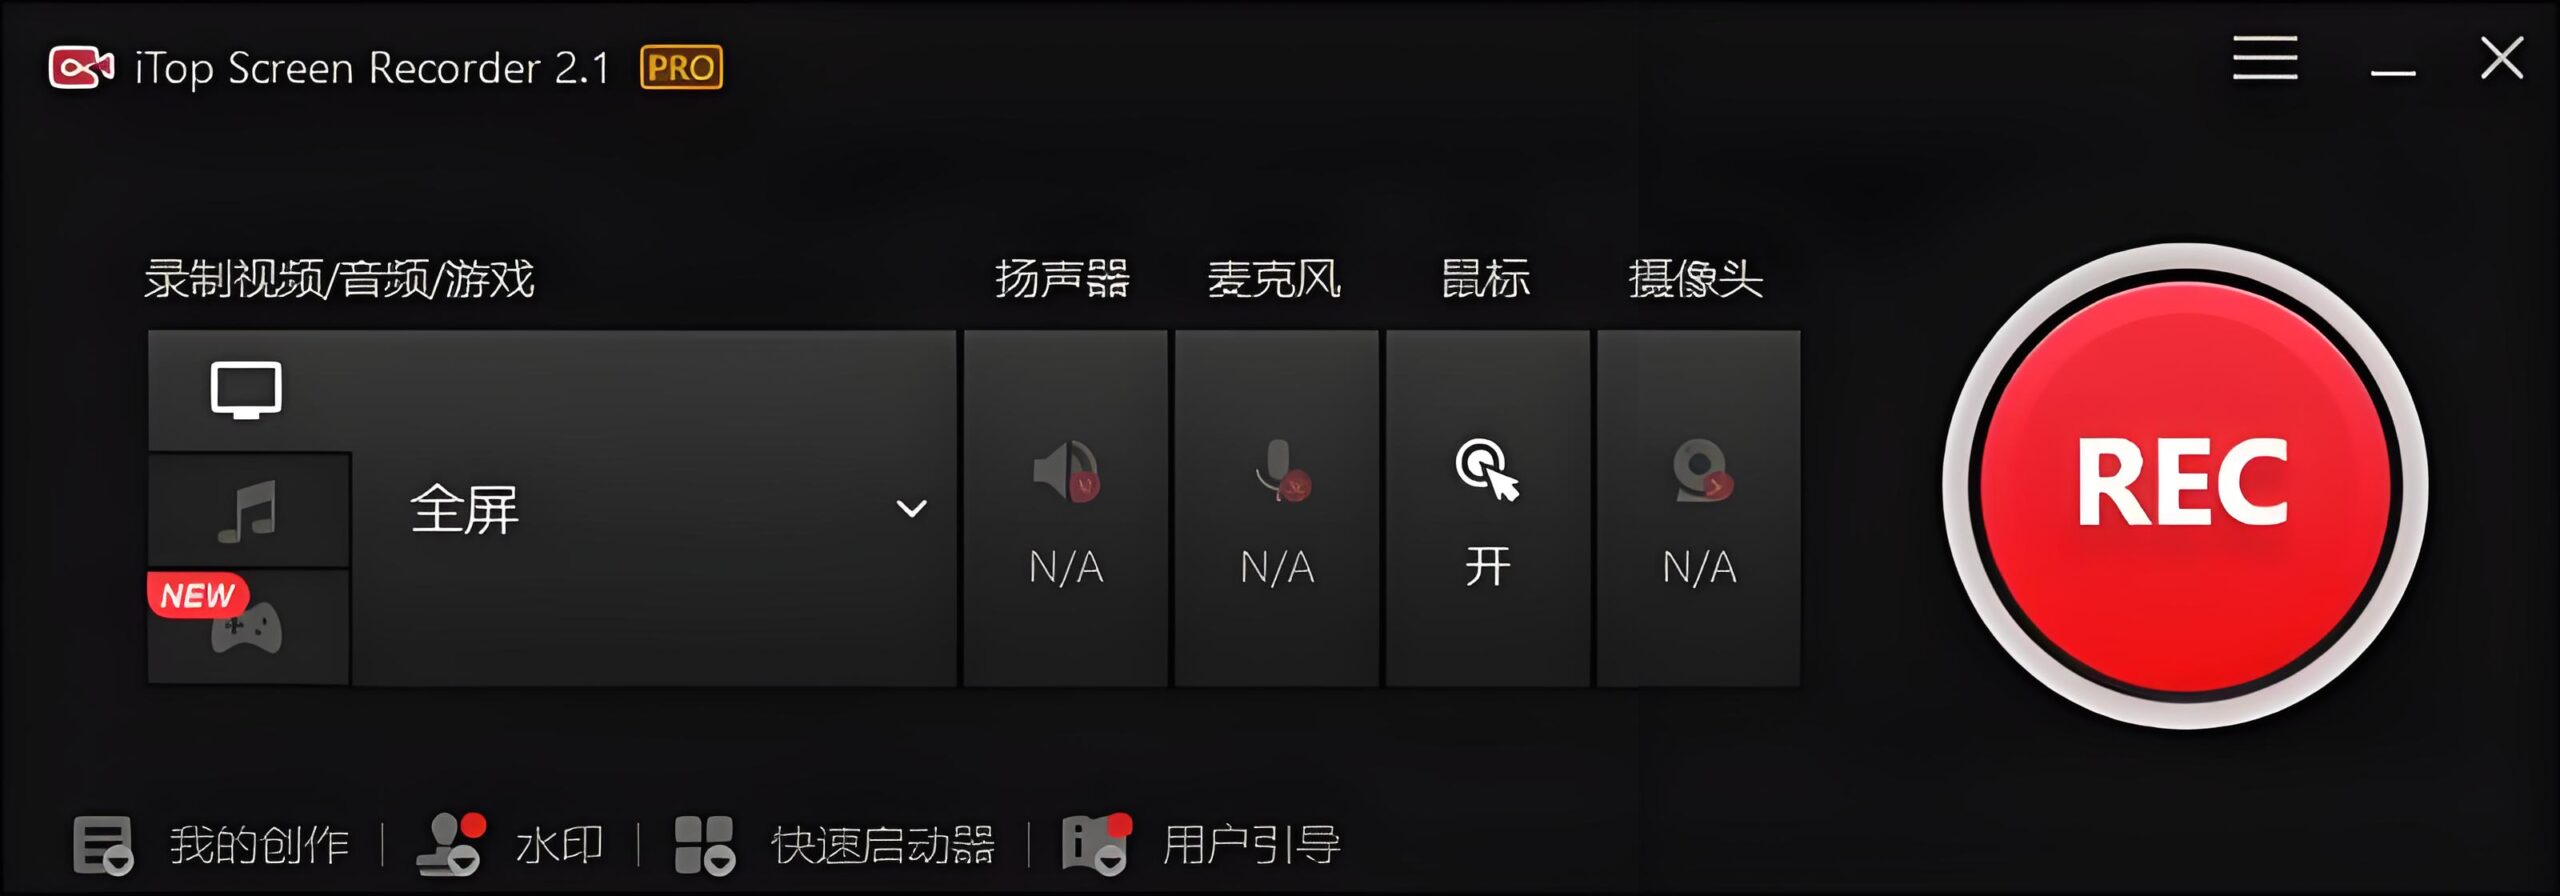 iTop Screen Recorder PRO 专业屏幕录制工具正版激活码